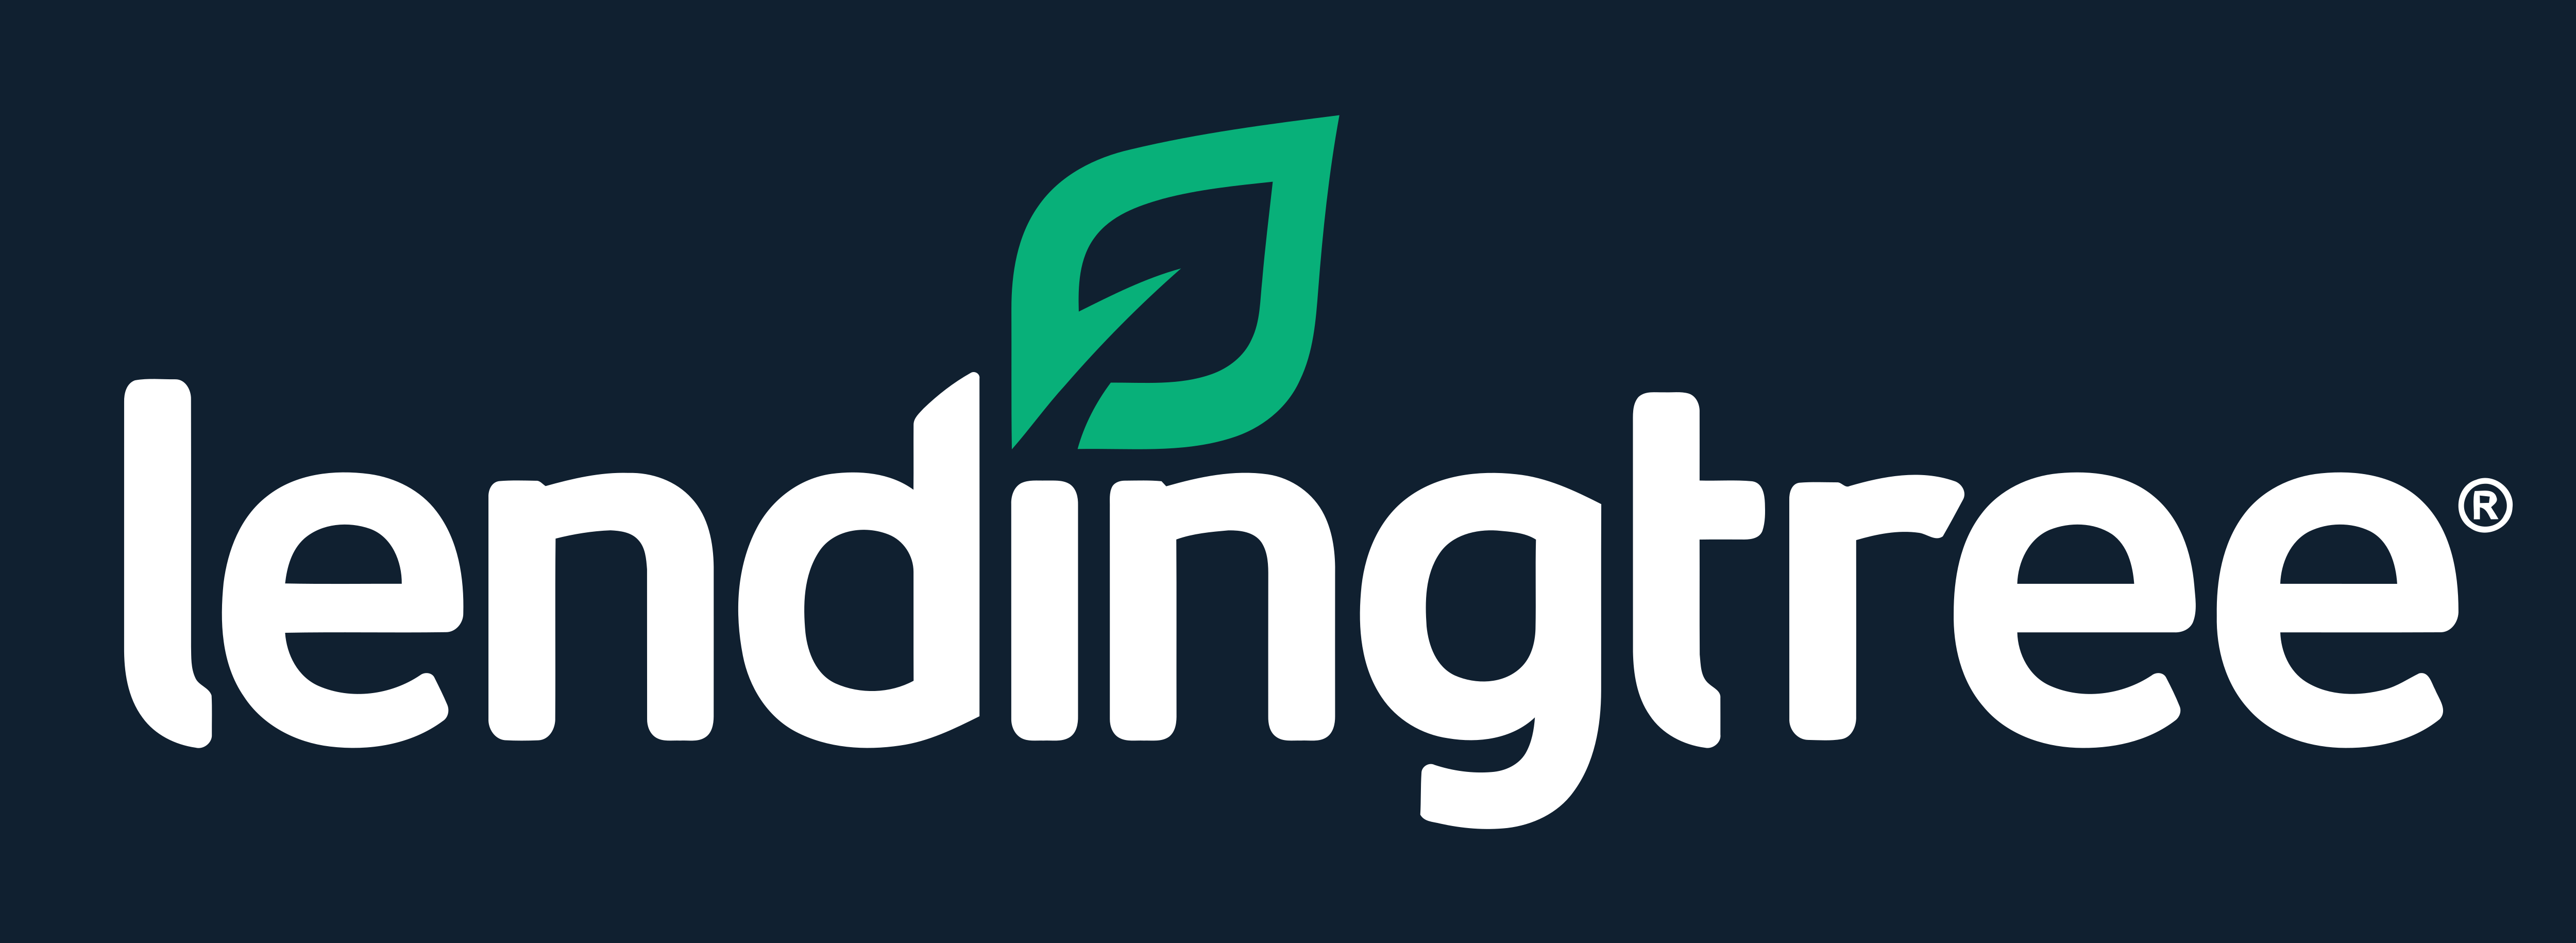 LendingTree – Logos Download